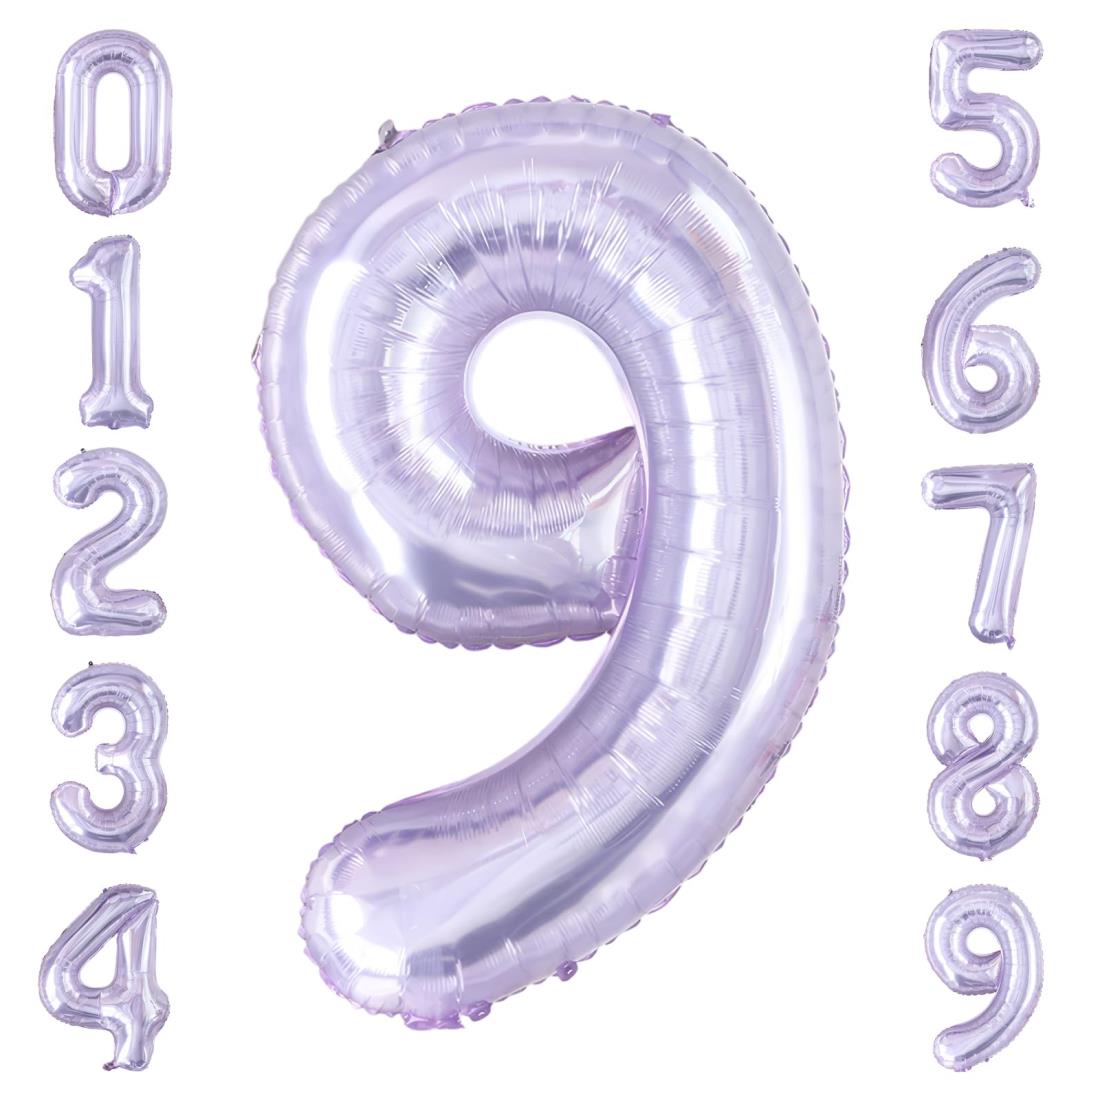 GRESATEK バルーン 数字 風船 誕生日 紫 40インチ 大きい ナンバー9 バースデーバルーン 飾り付け 結婚式 パーティー 記念日 ウェディング クリスタル ゼリー クリスタル パープル 9